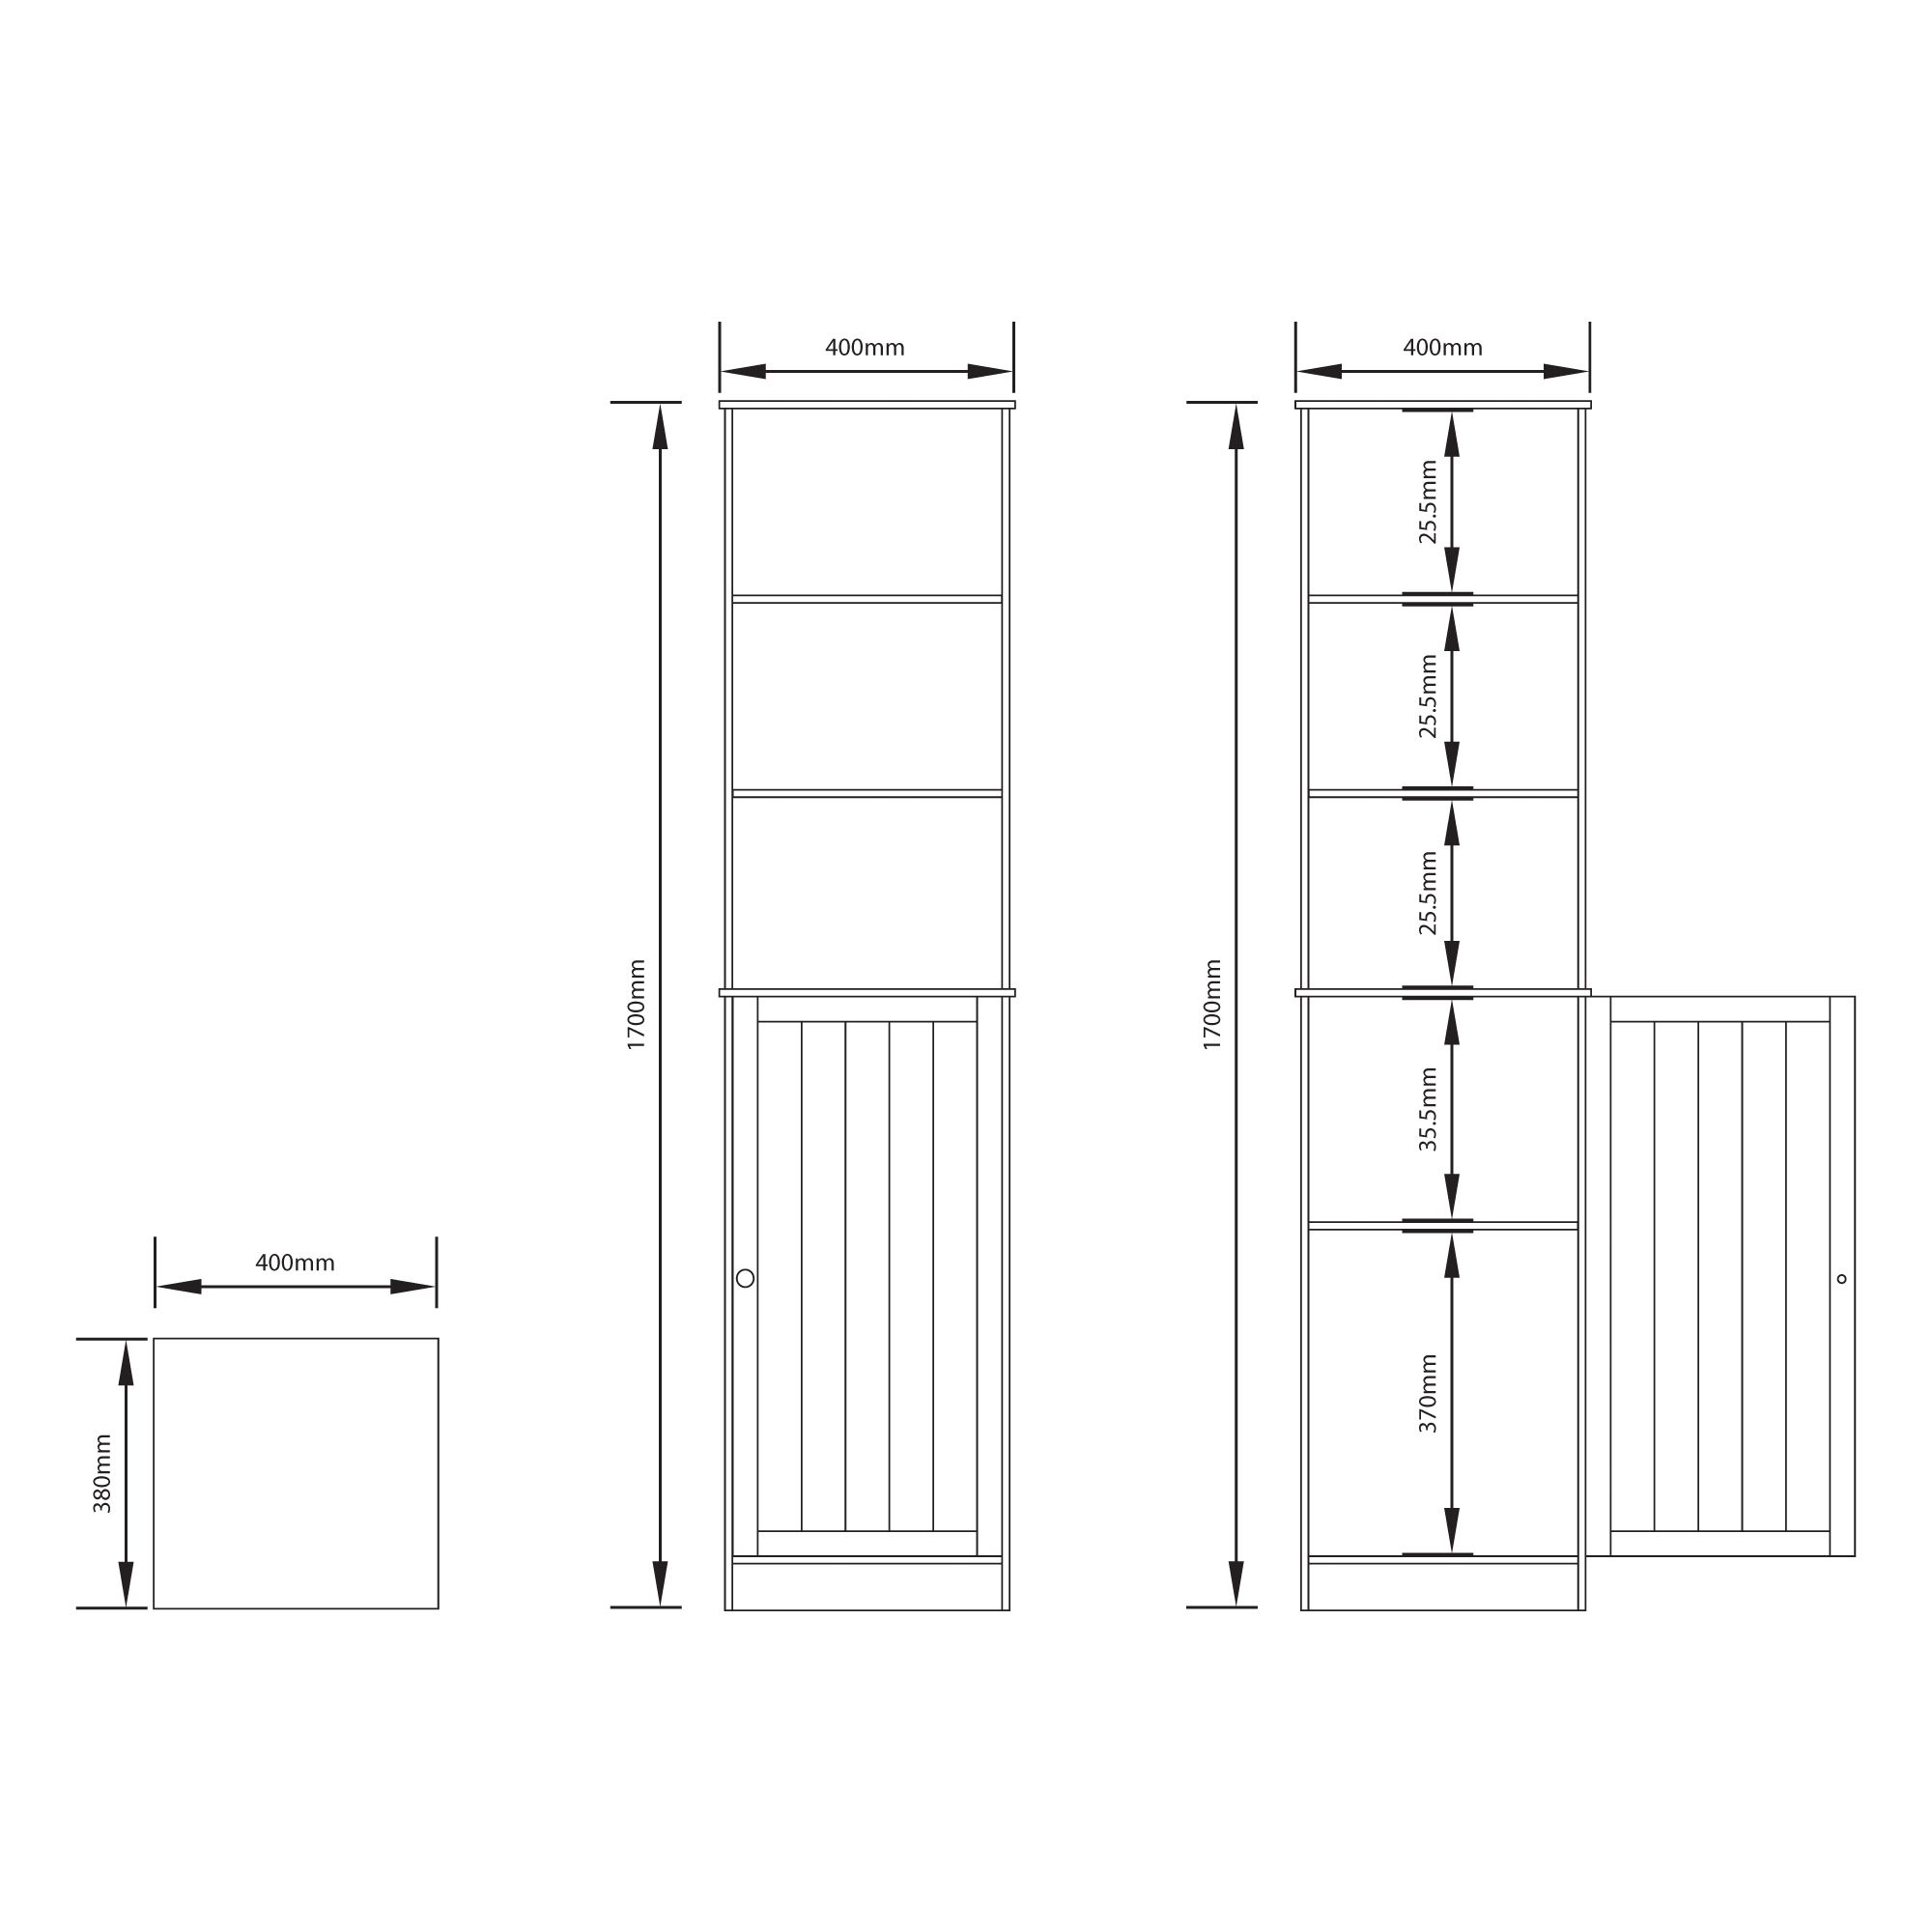 Lassic Rebecca Jones Tall Matt White Single Wall-mounted Bathroom Cabinet (H)170cm (W)40cm